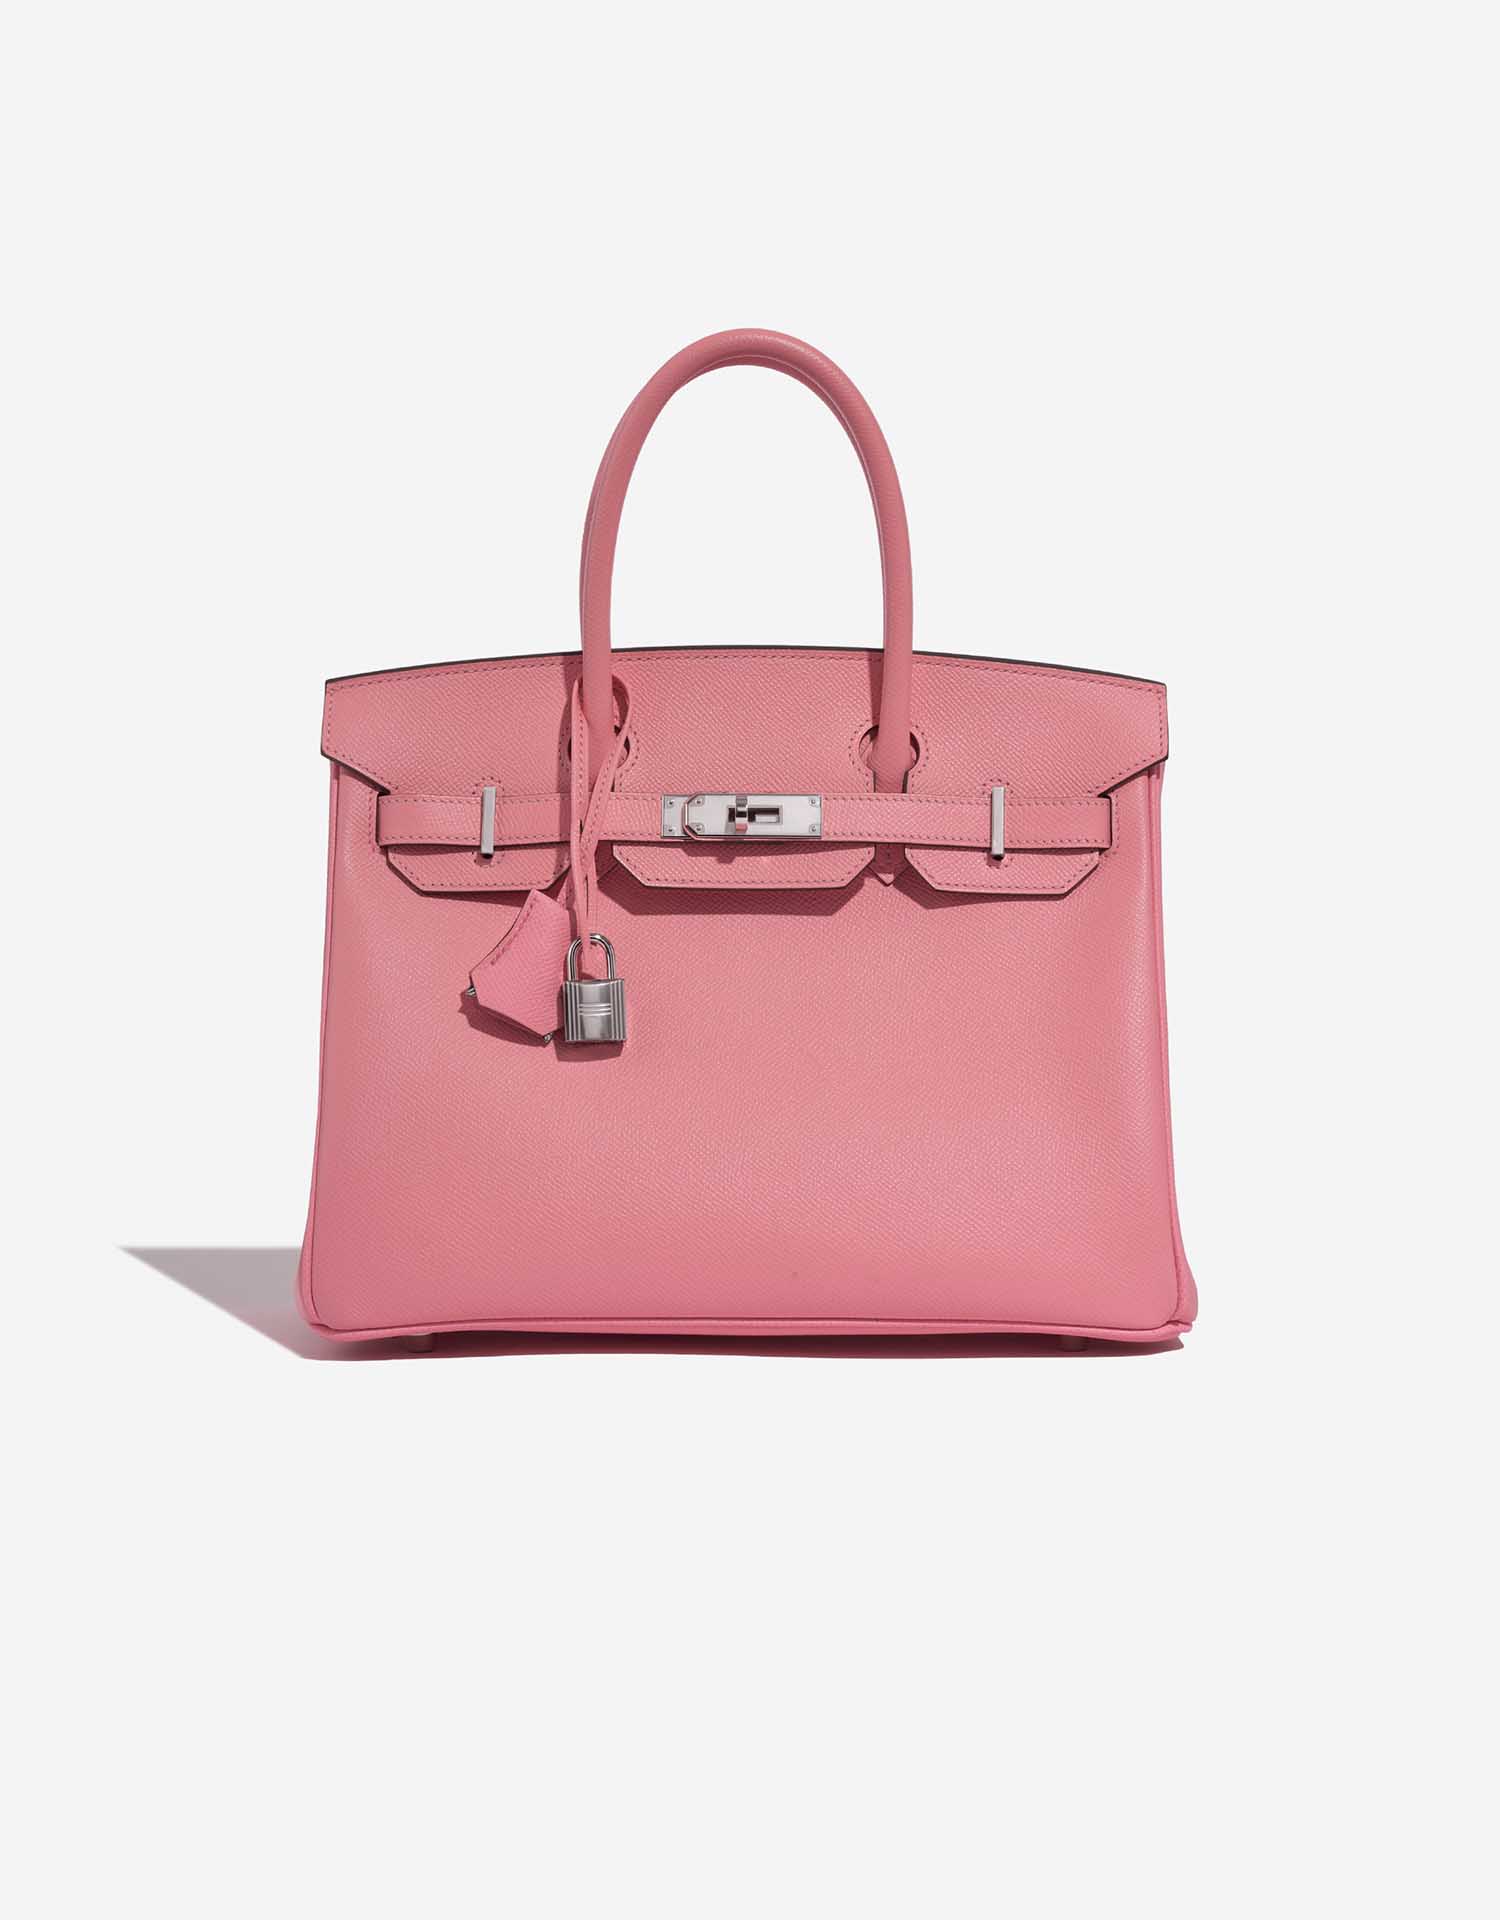 Hermès Birkin 30 Espom Rose Confetti | SACLÀB